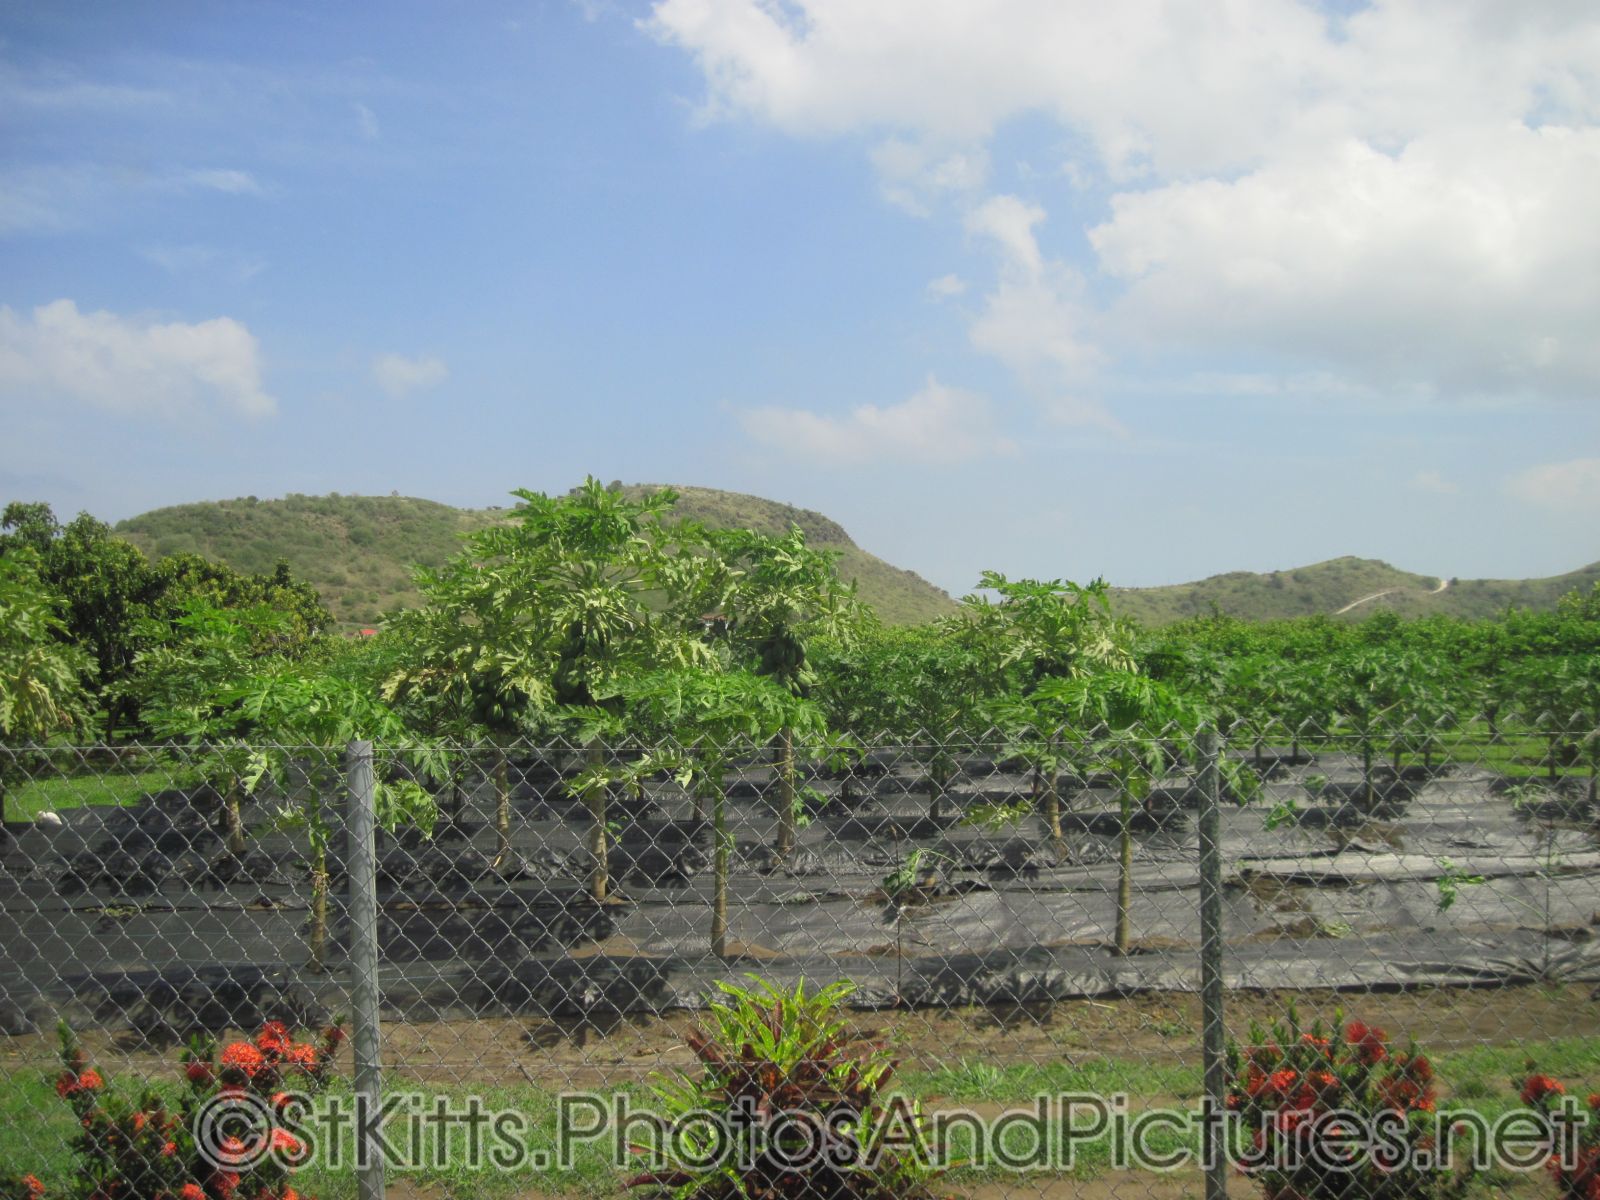 Tree farm in St Kitts.jpg
